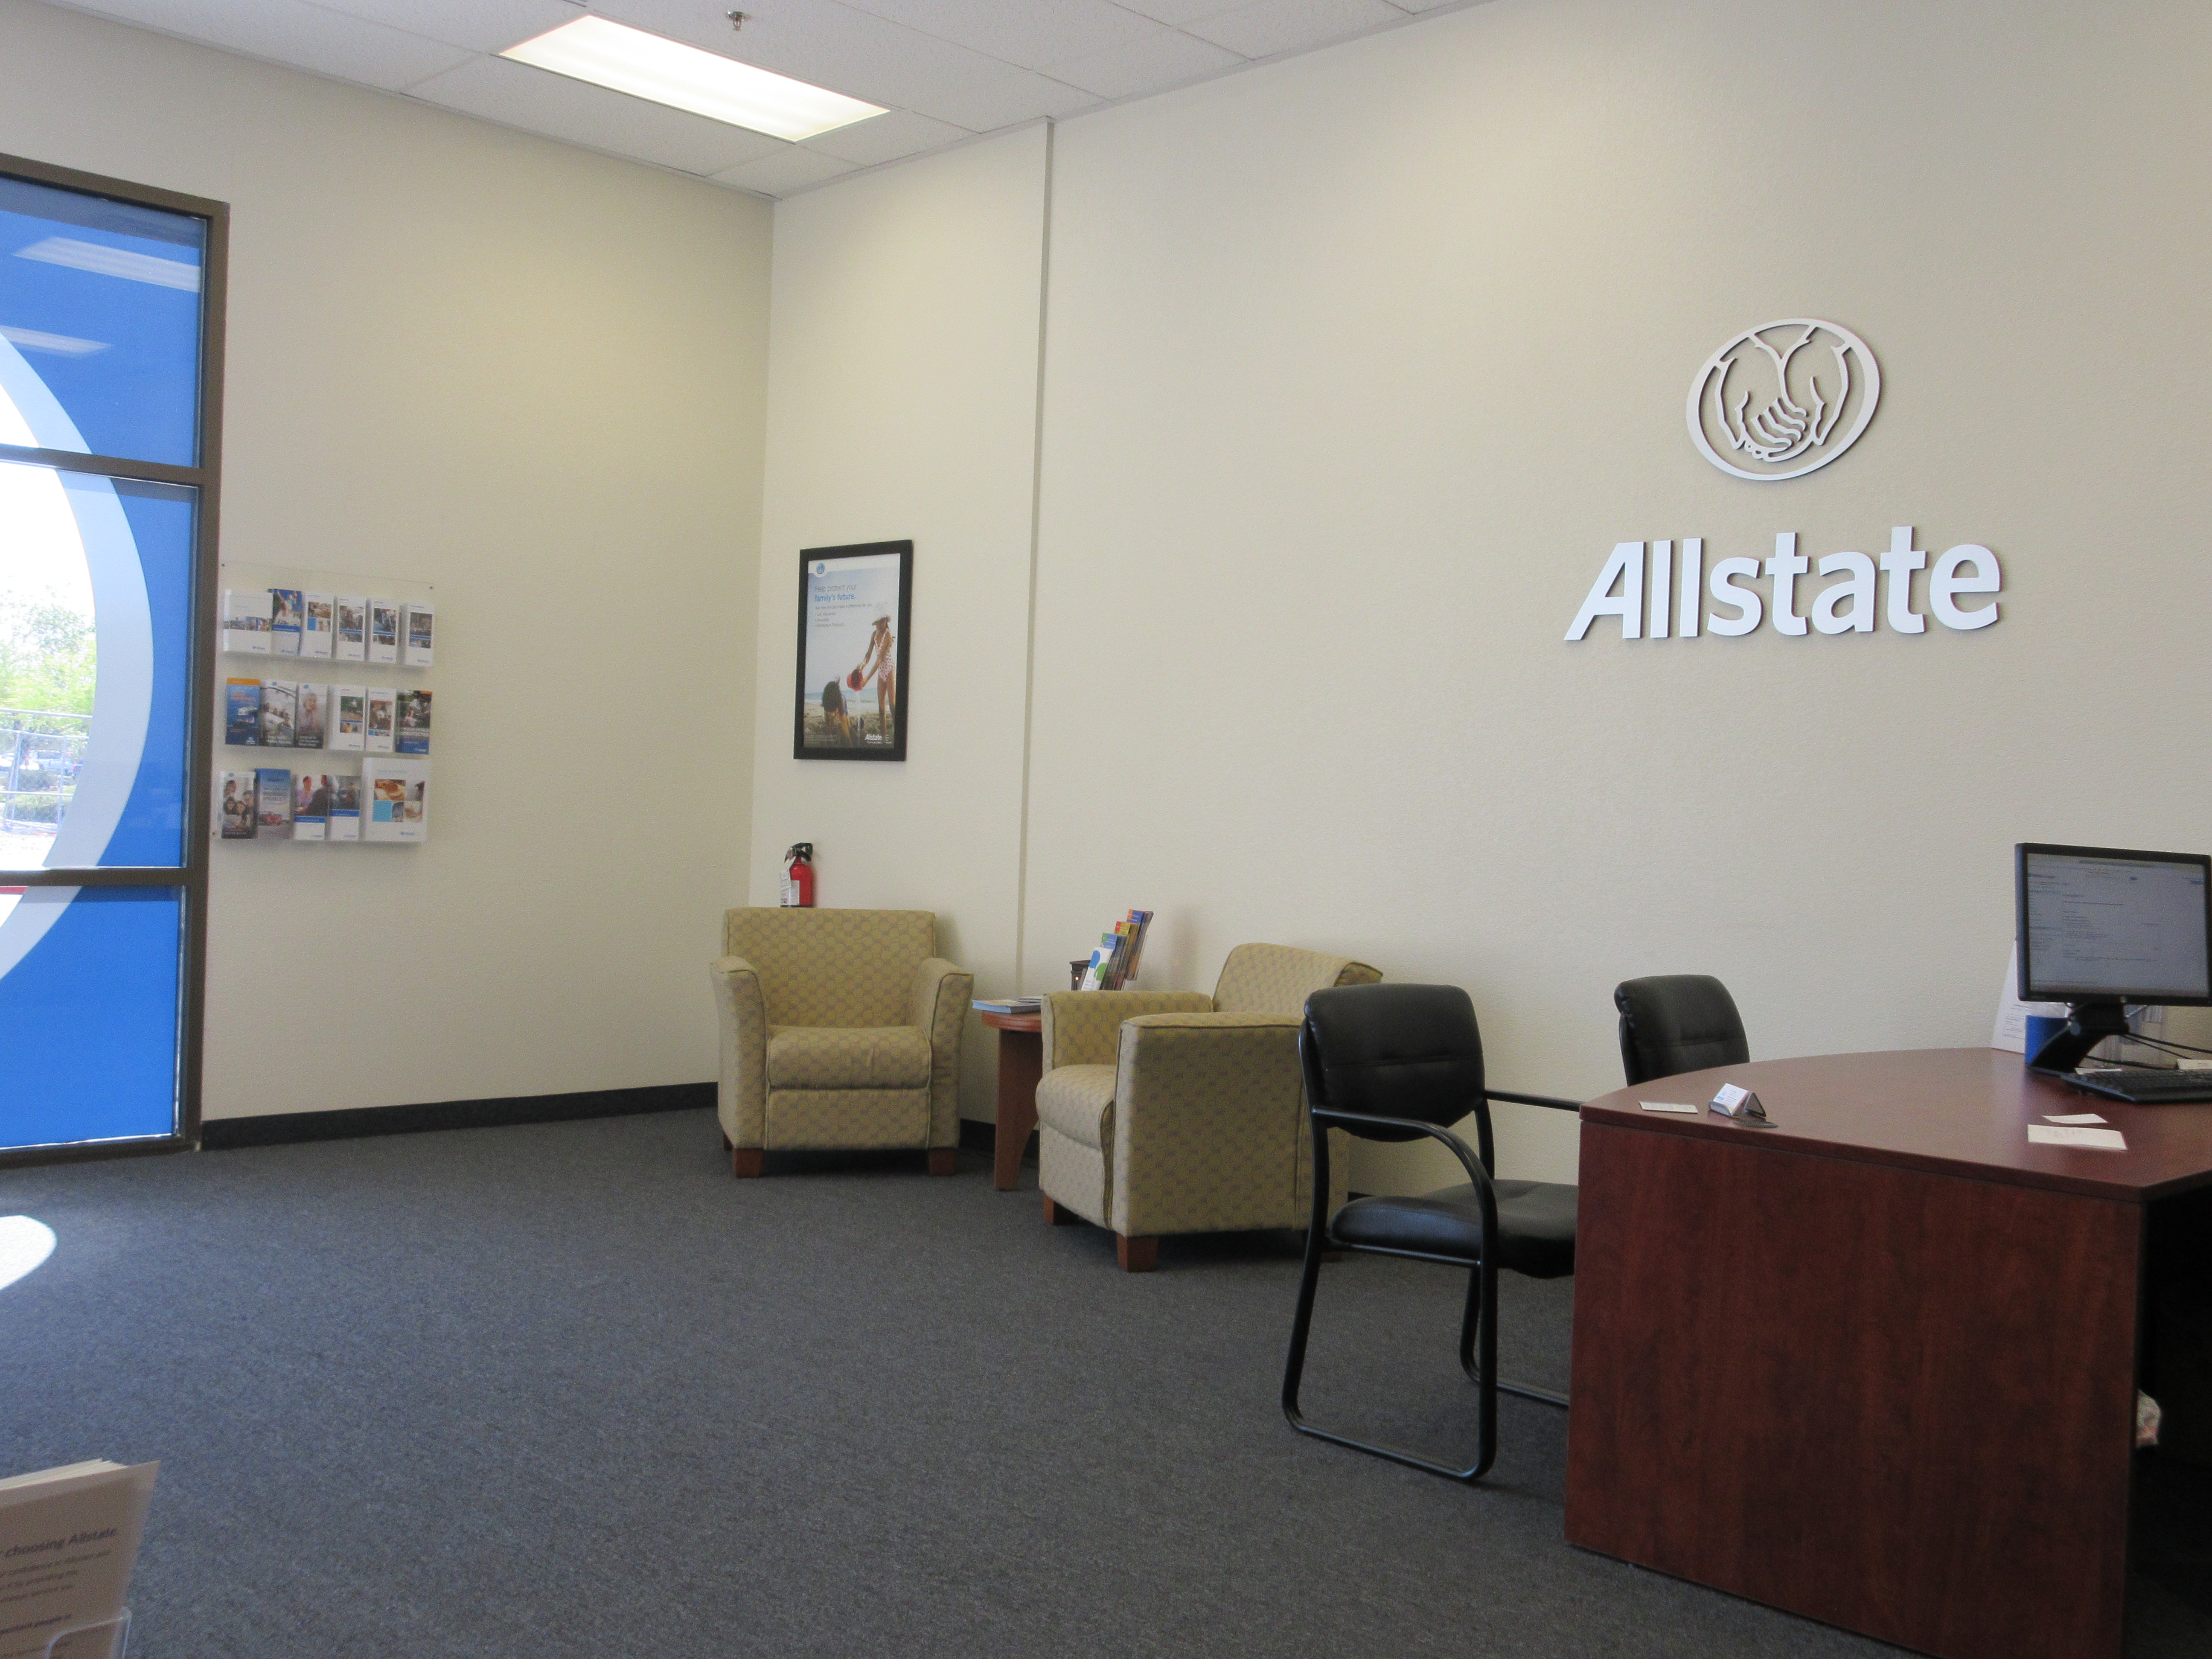 Gary Cox: Allstate Insurance Photo